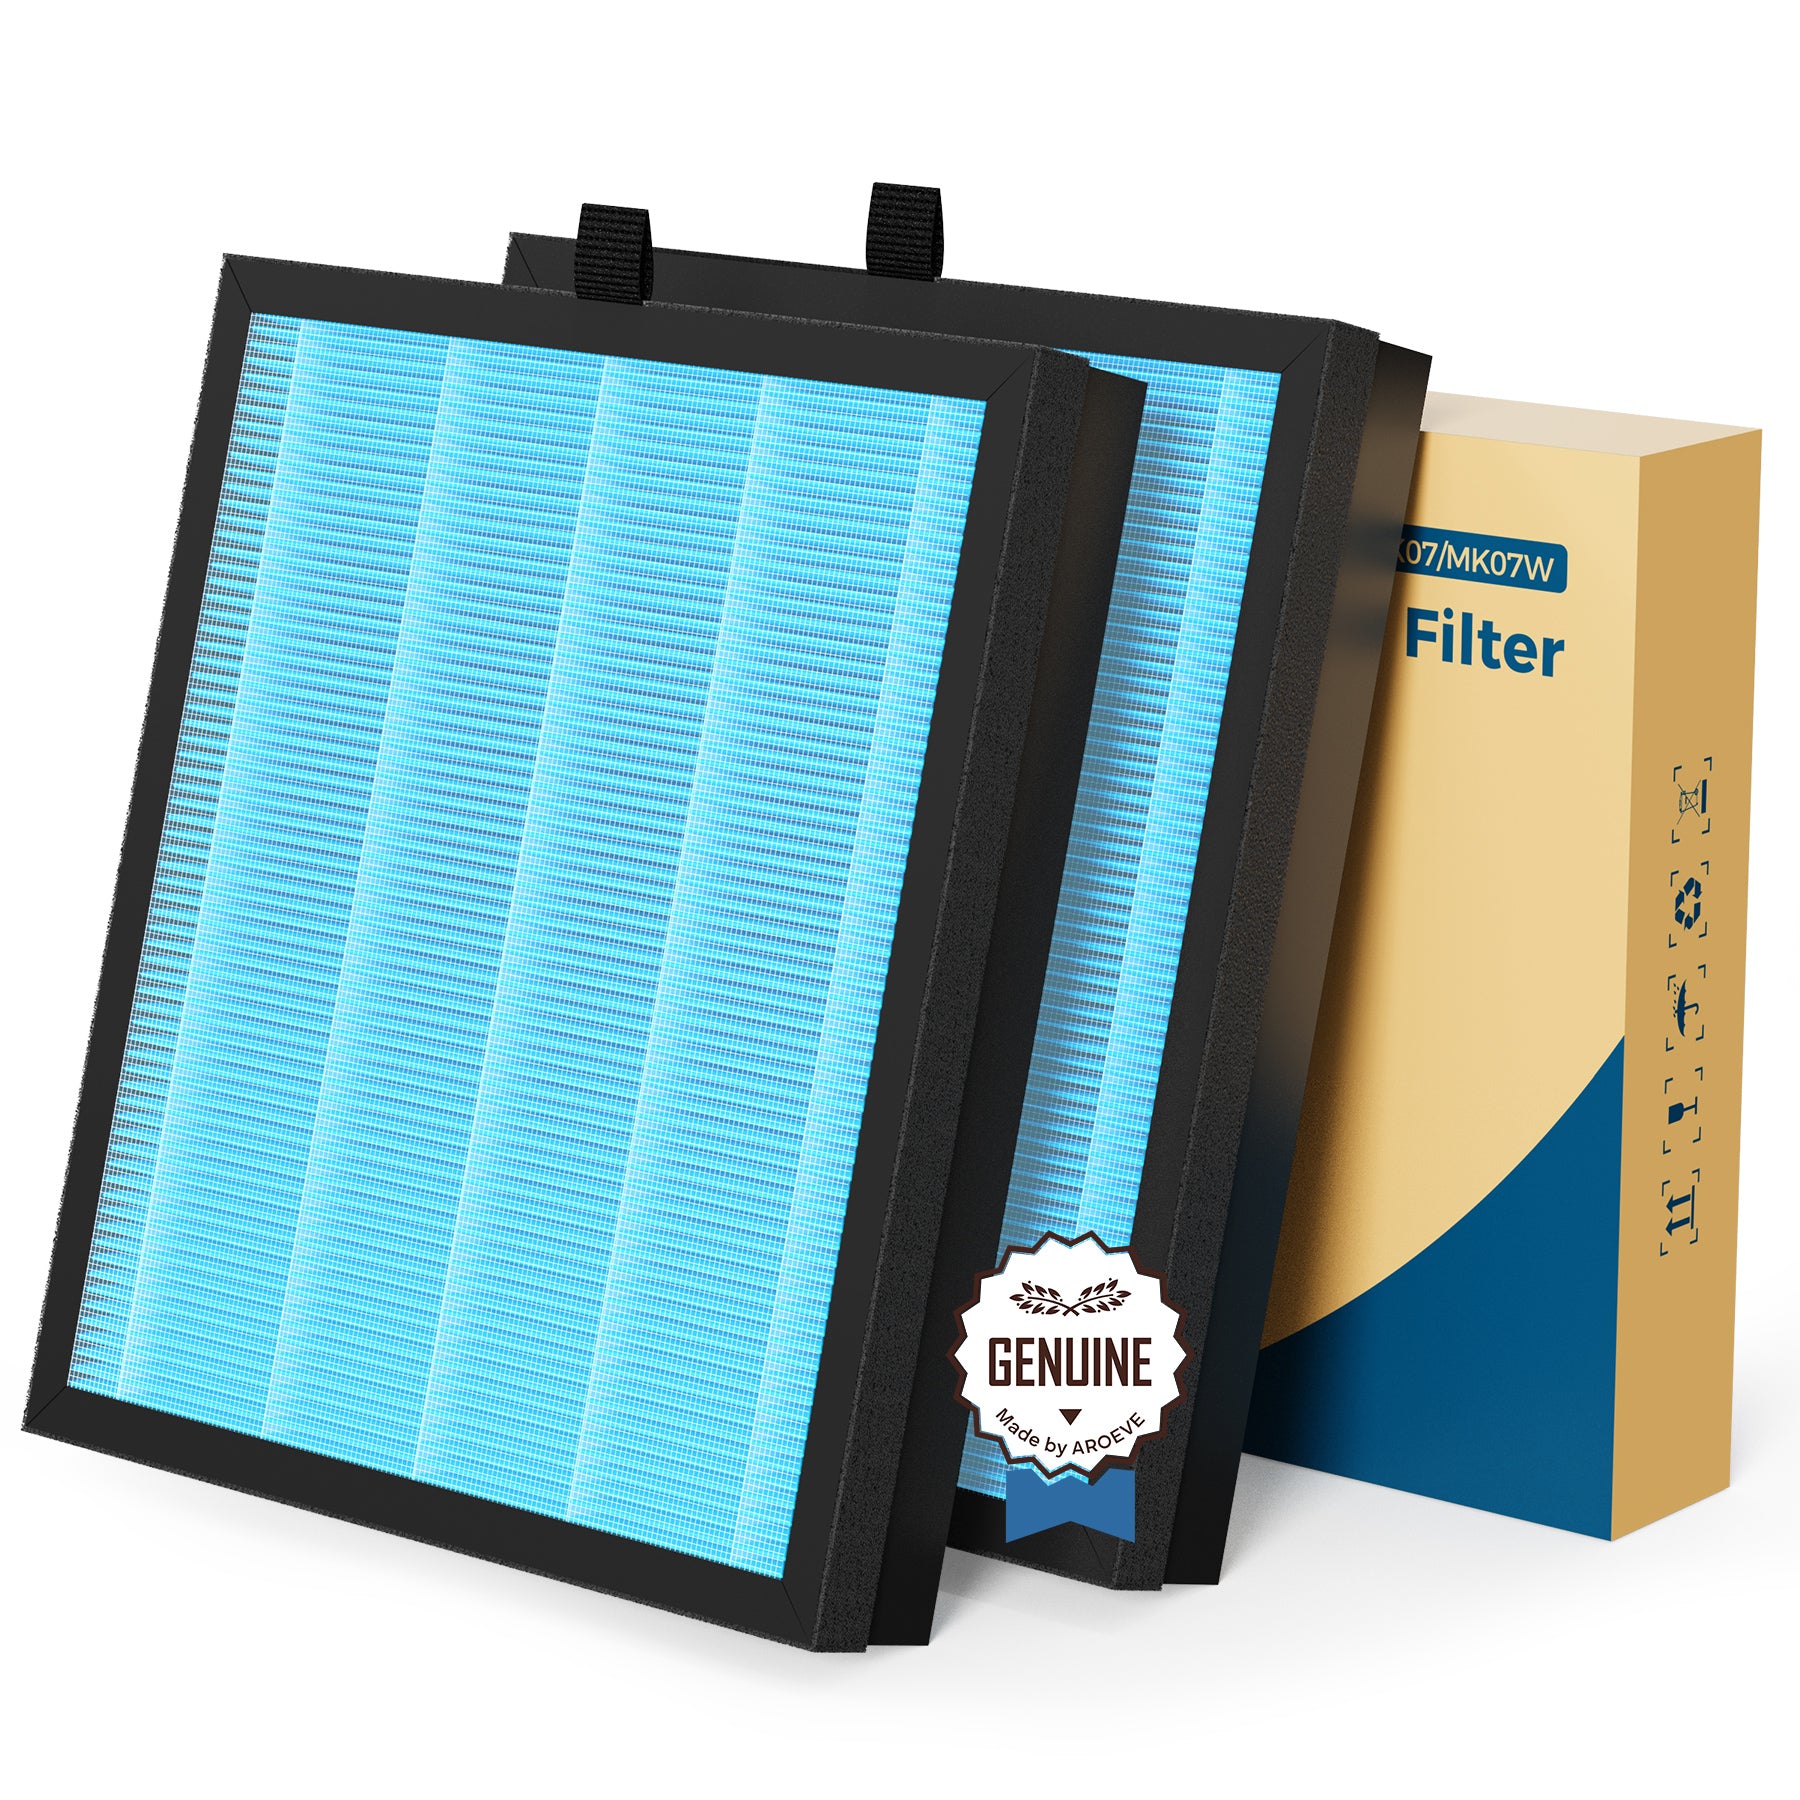 AROEVE Air Filter Replacement | MK07- Standard Version(2 packs)